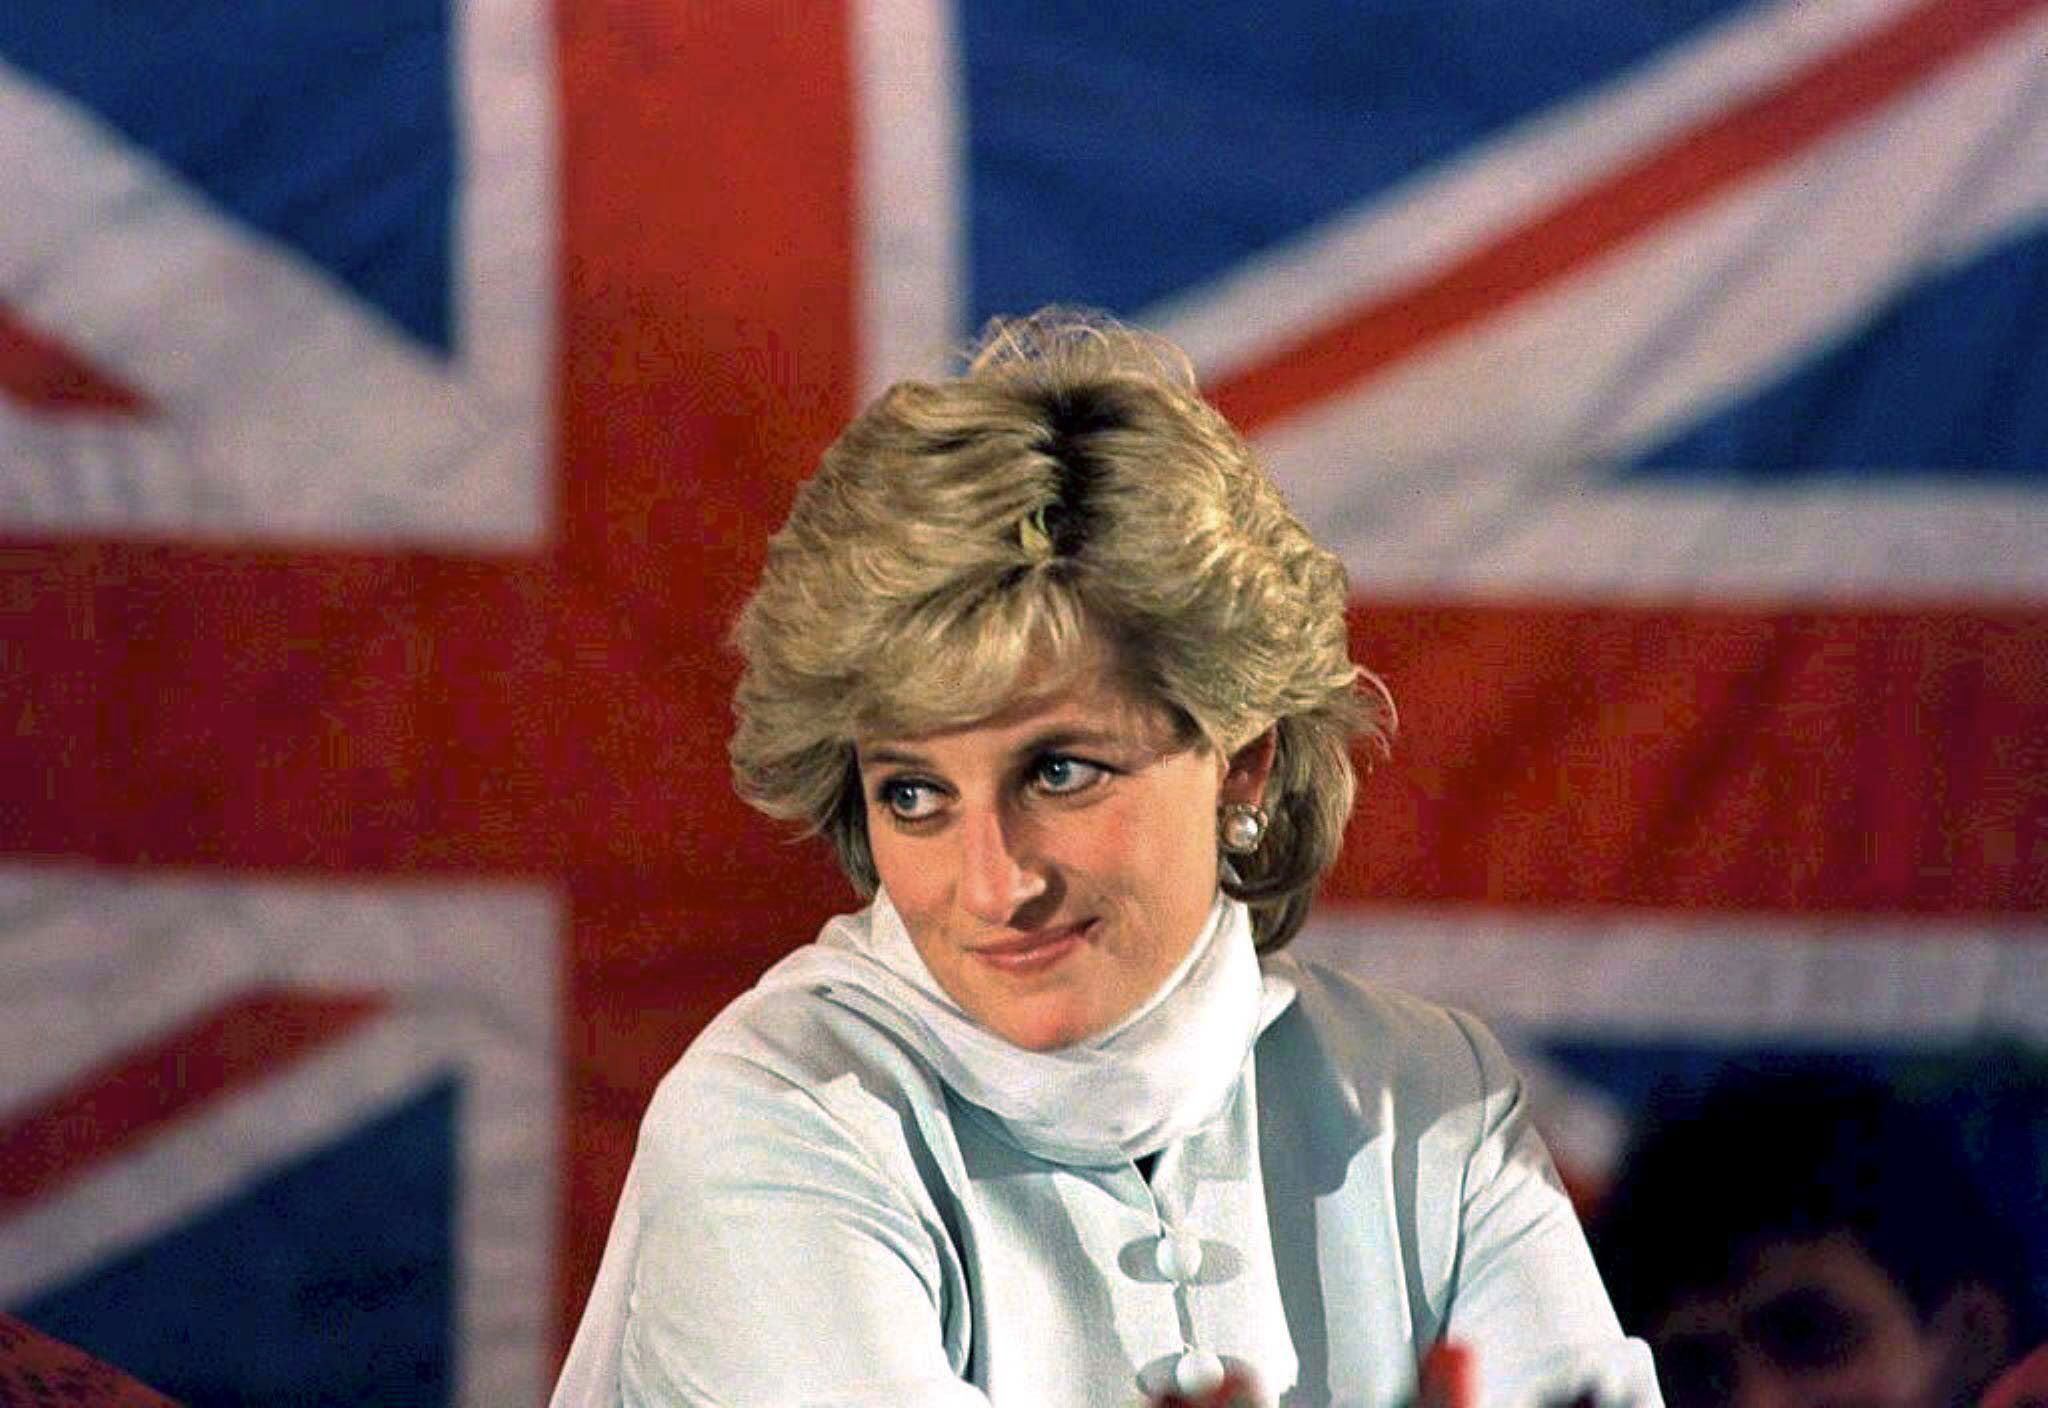 Prinzessin Diana galt auch als Prinzessin der Herzen. (Archivbild) Foto: John Giles/PA/epa/dpa